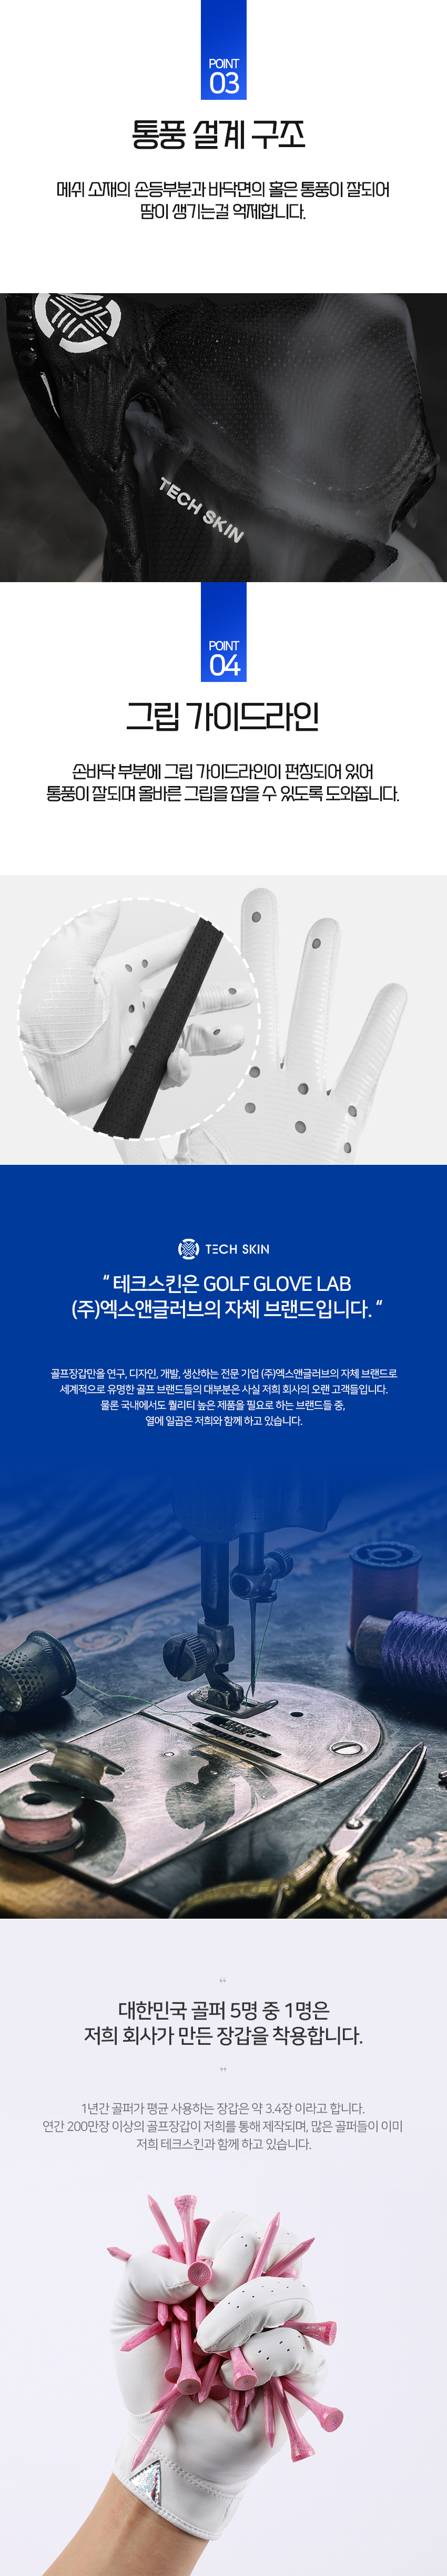 techskin_silicone_golf_glove_detail_04.jpg